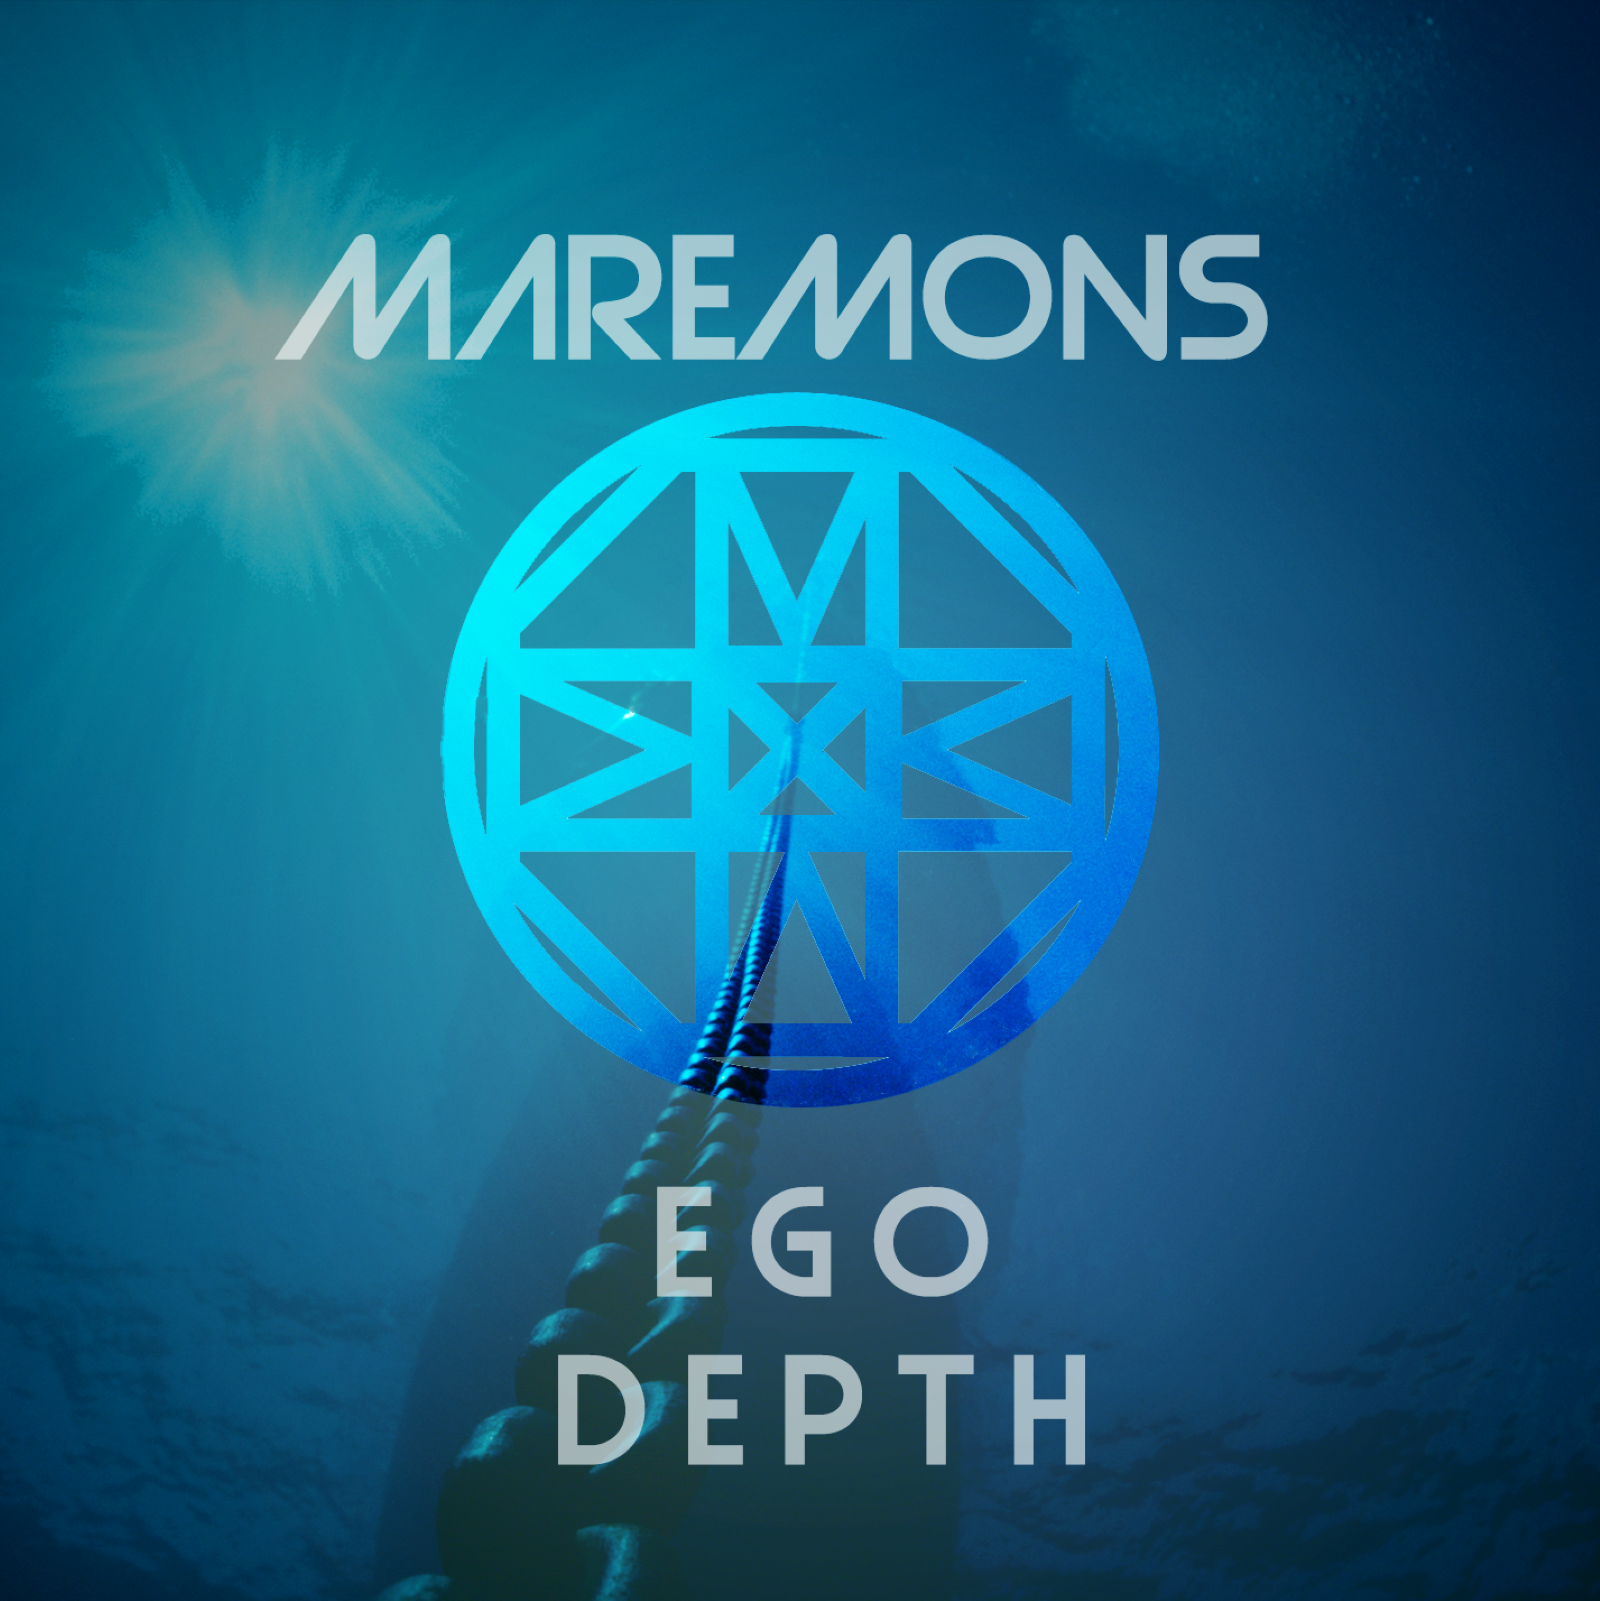 Maremons - 'Ego Depth'